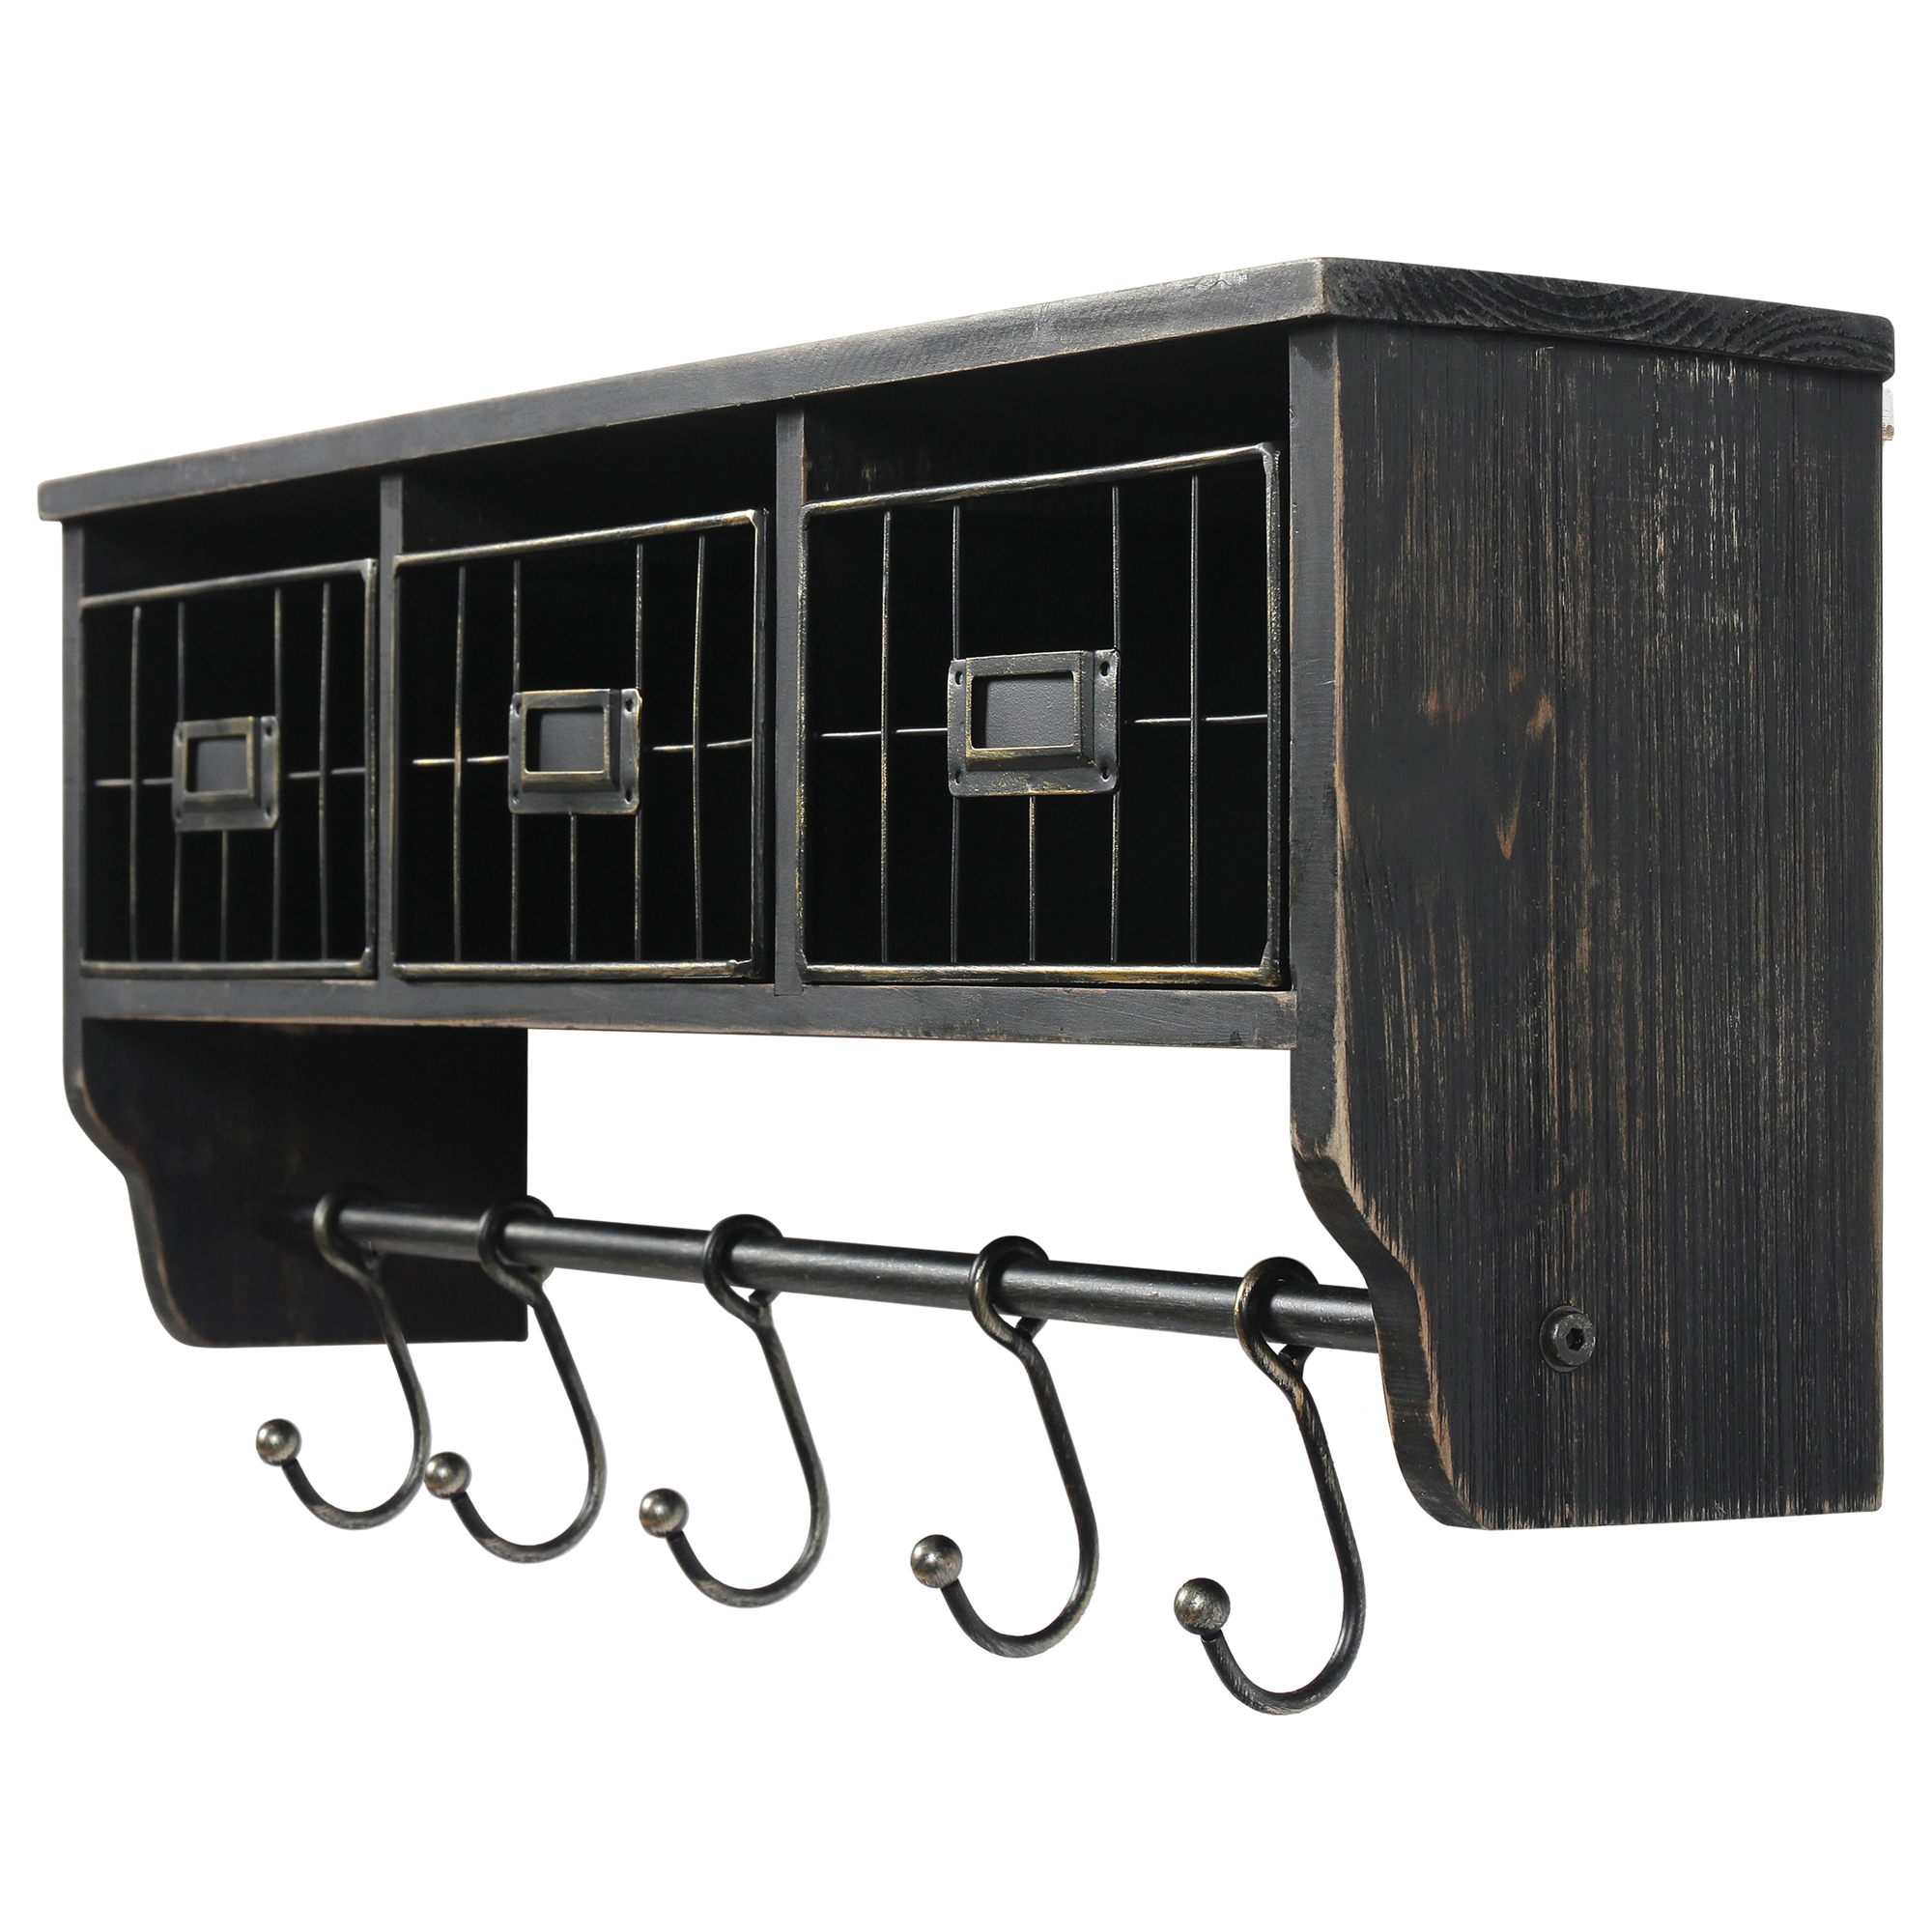 Rustic Coat Rack Wall Mounted Shelf with Hooks  Baskets, Entryway Organize - 1